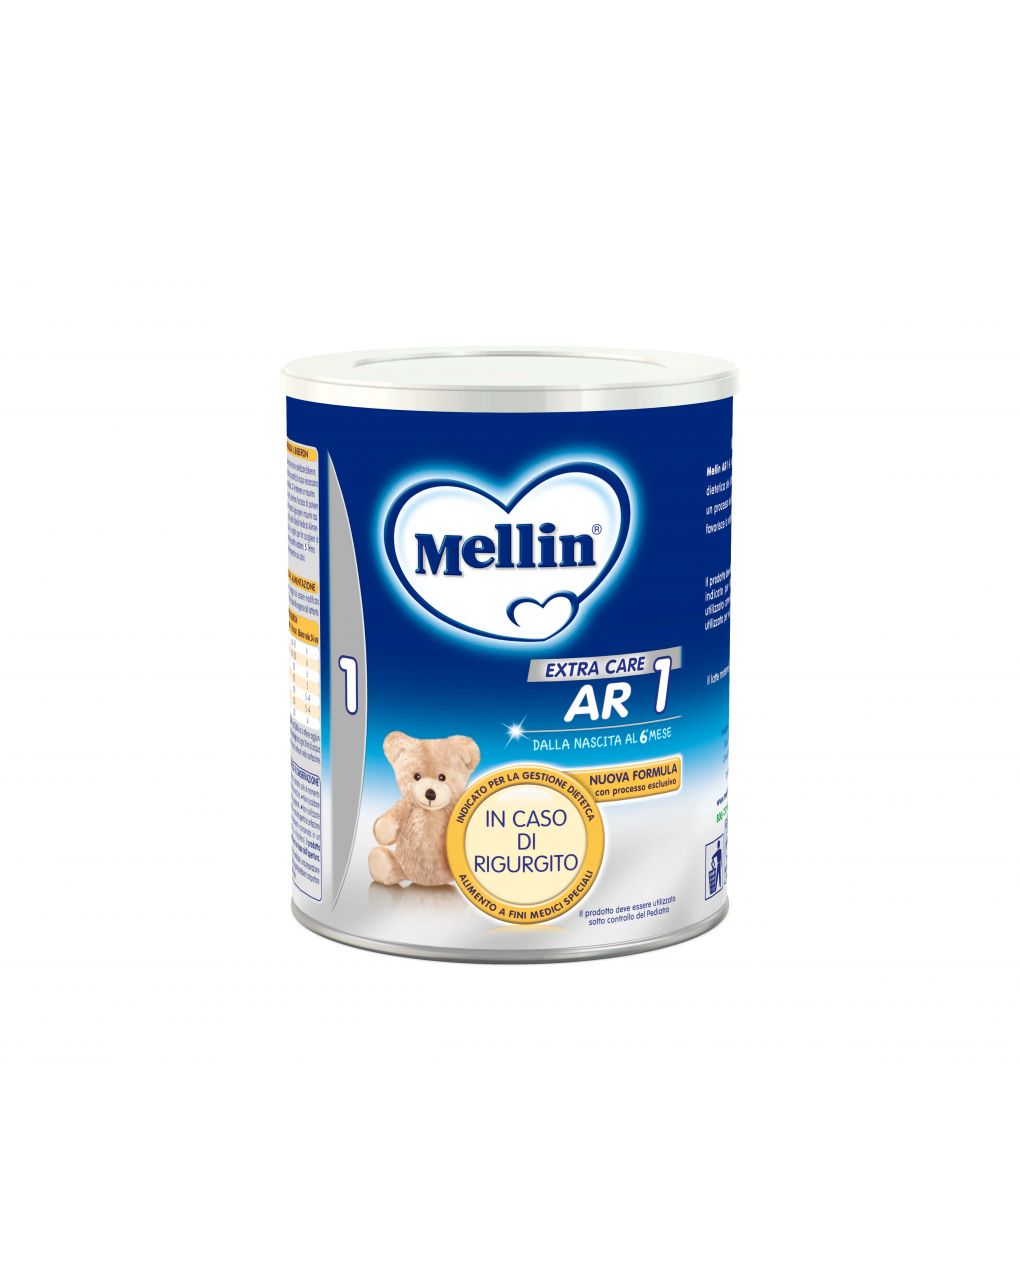 Mellin - latte mellin ar 1 polvere 400g - Mellin